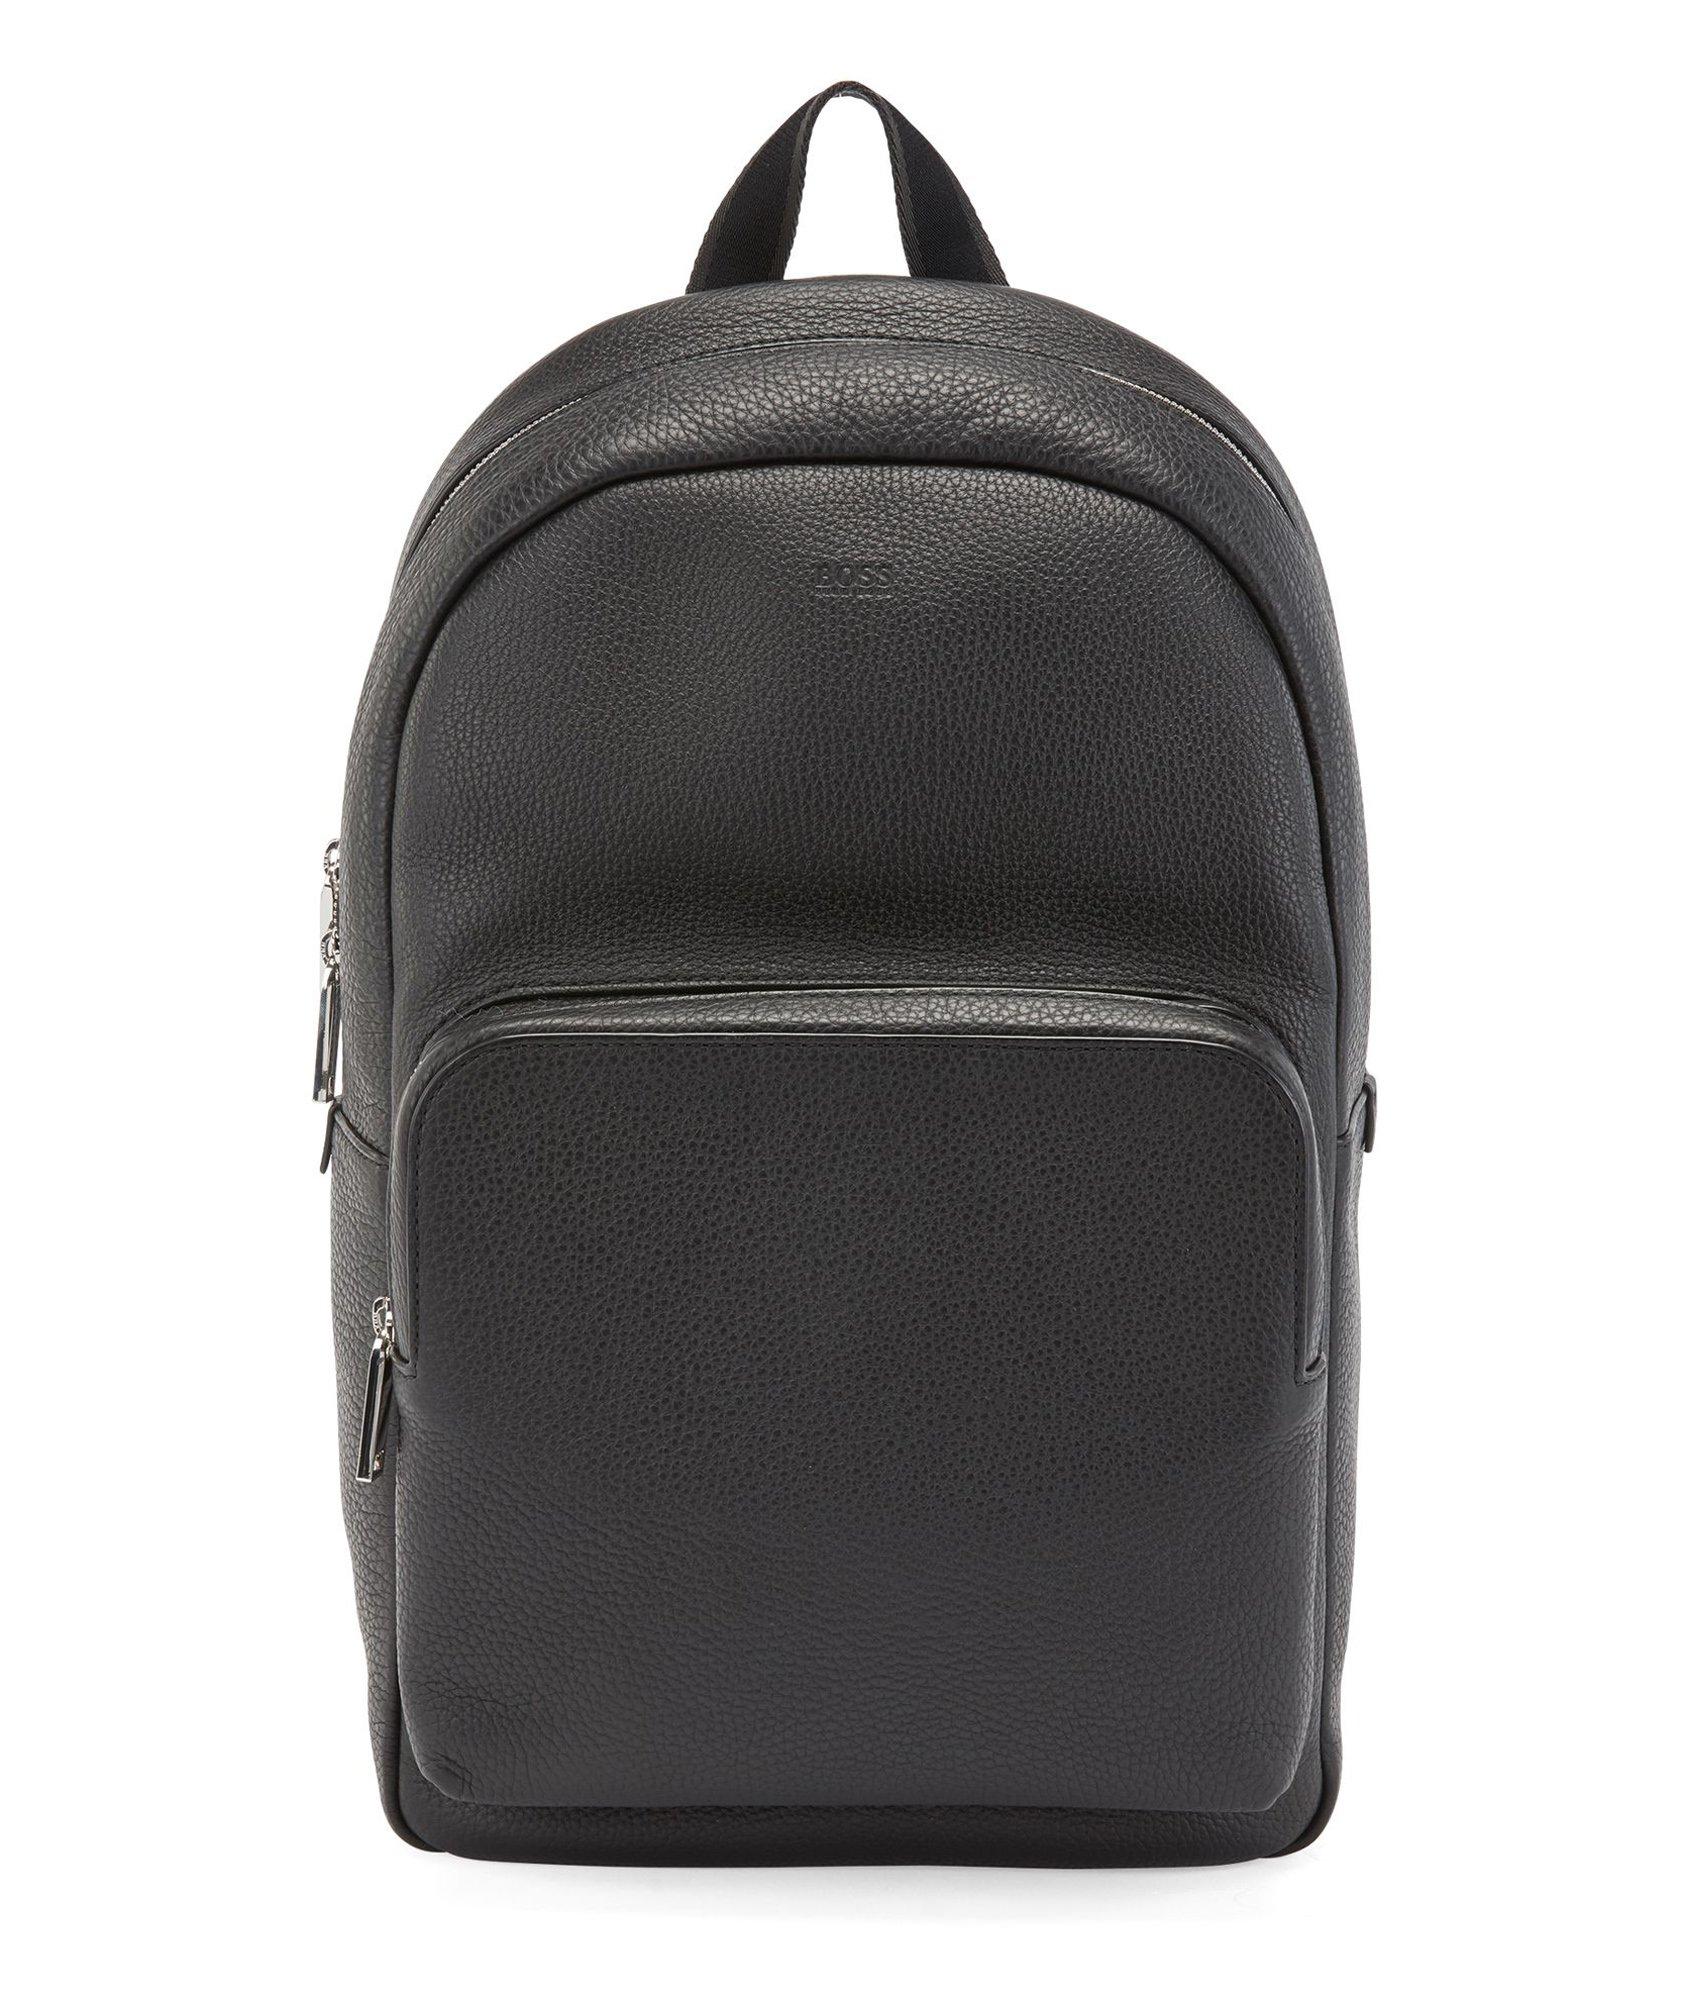 Grainy Italian Leather Backpack image 0